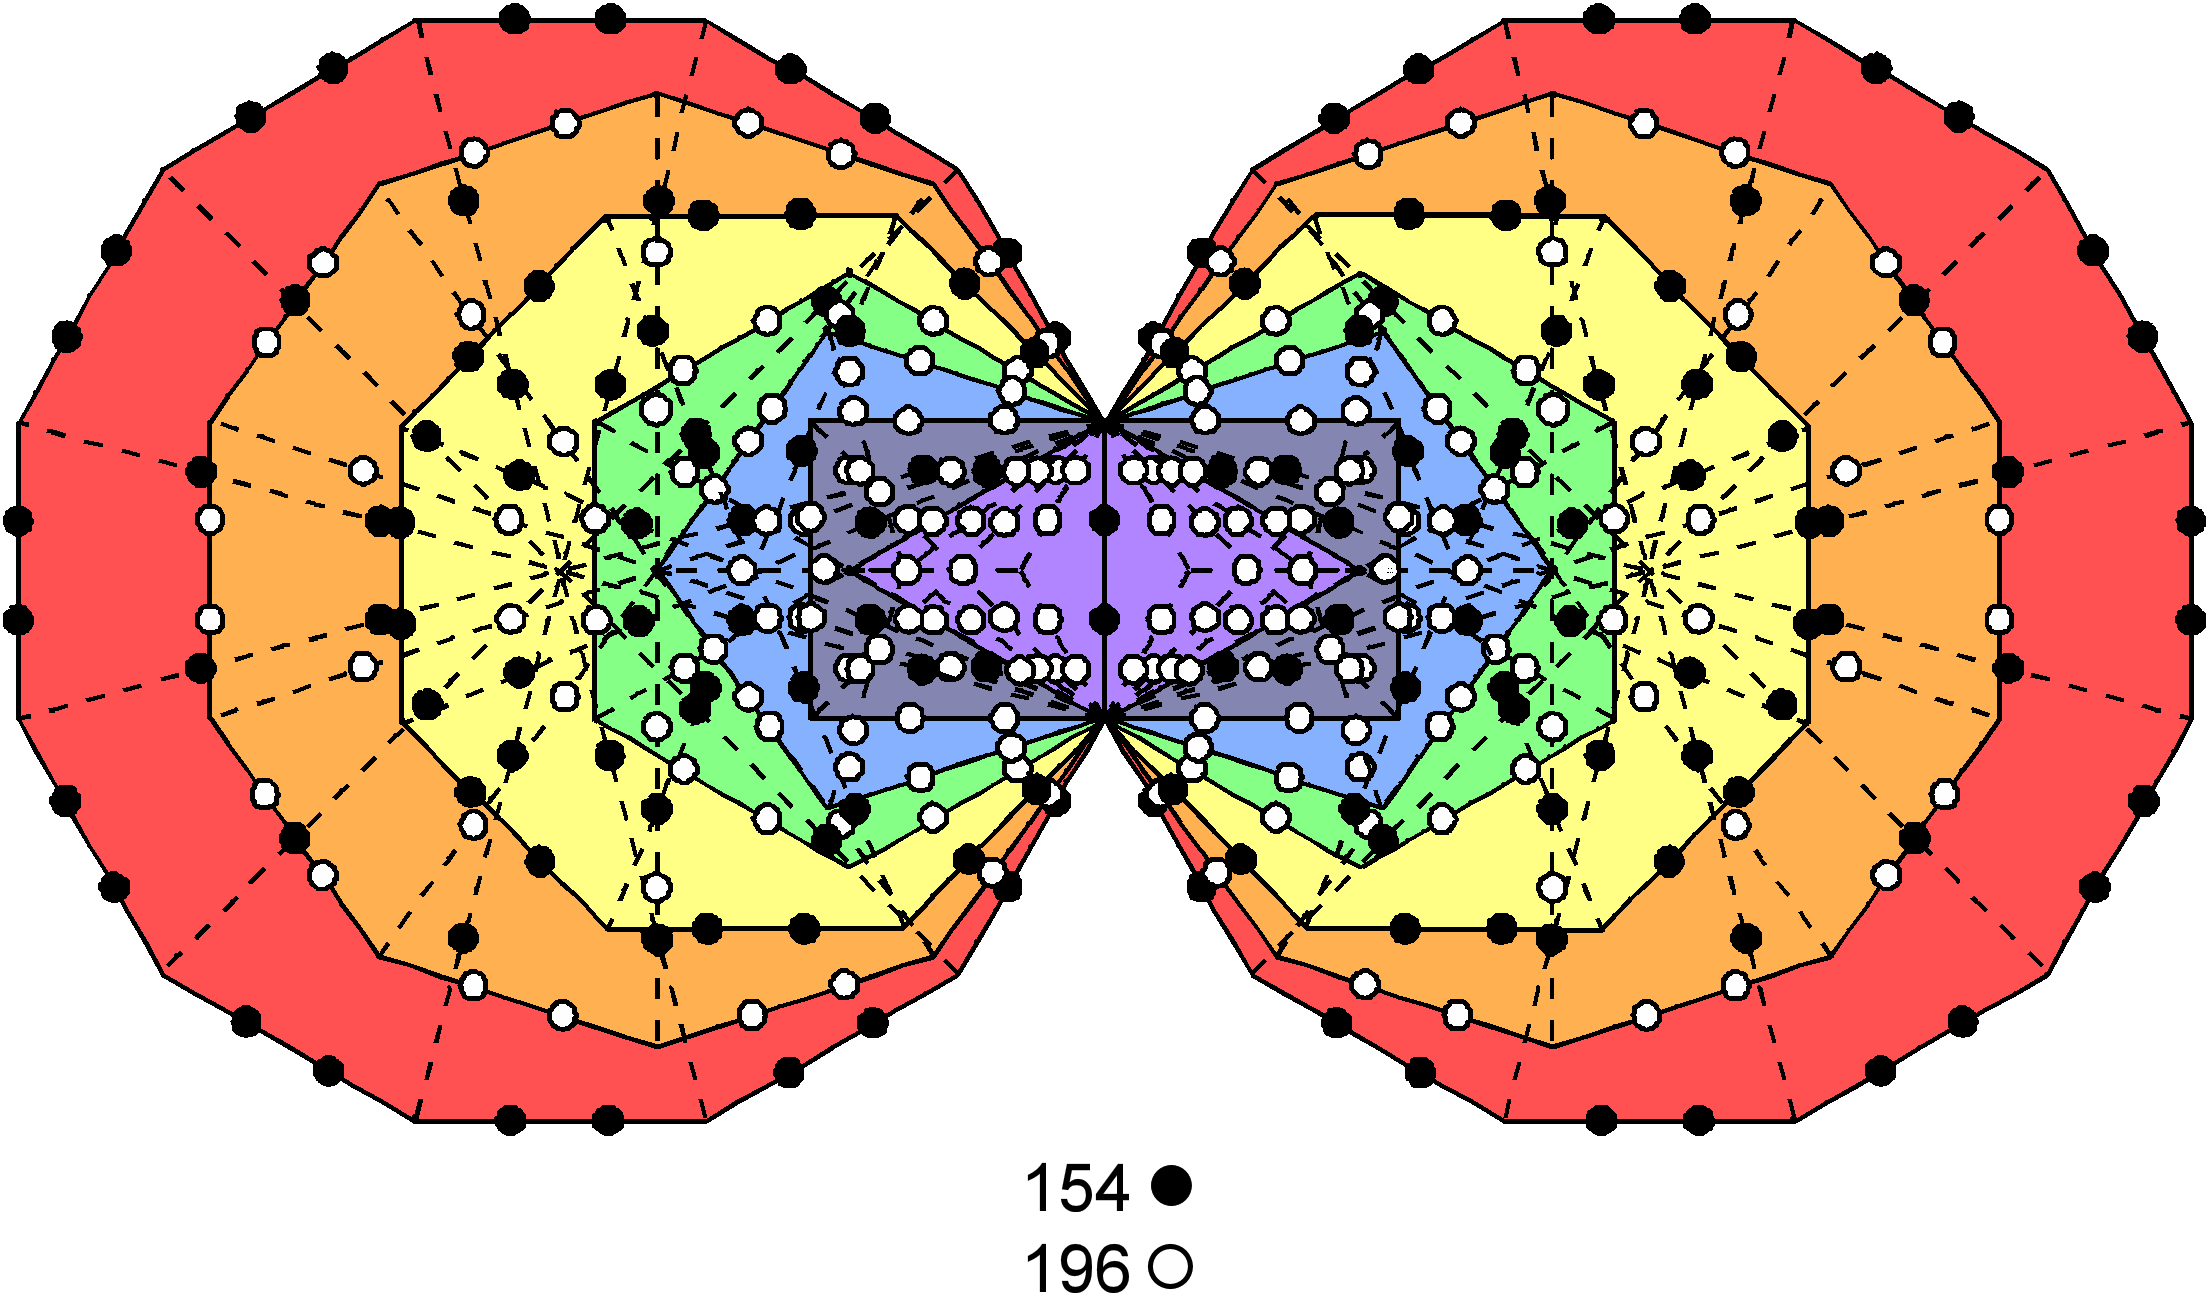 (154+196) hexagonal yods in (7+7) enfolded polygons